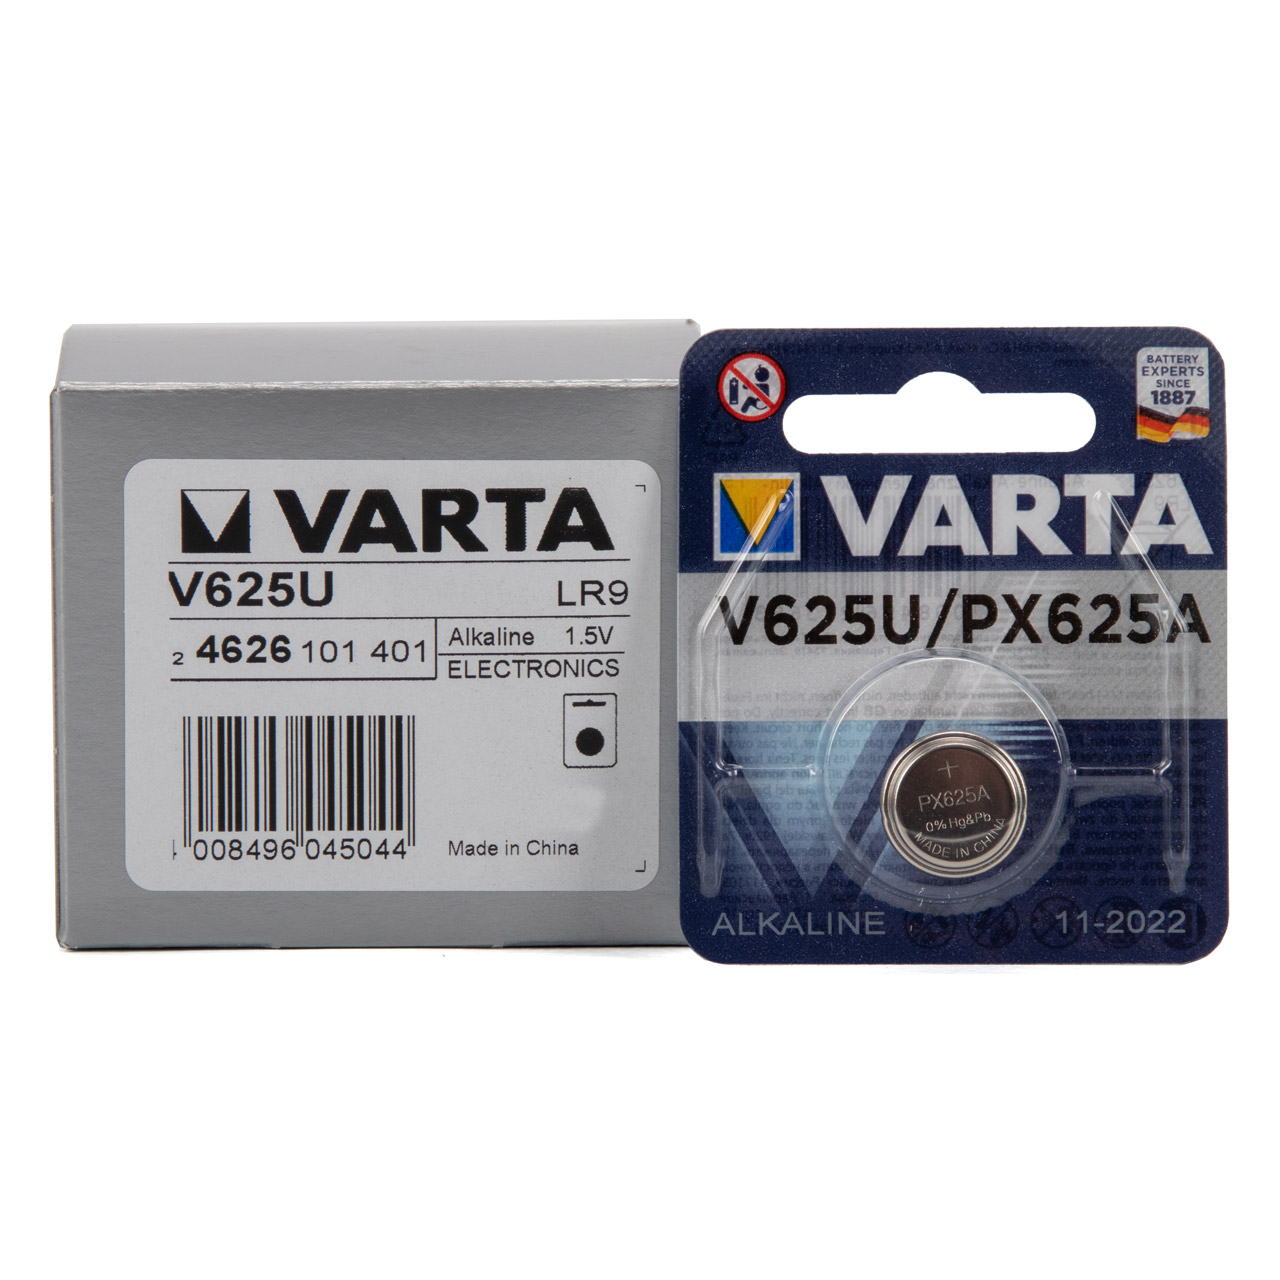 10x VARTA V625U LR9 PX625A Knopfzelle Knopfbatterie Batterie Alkaline 1.5V Schlüssel Uhr